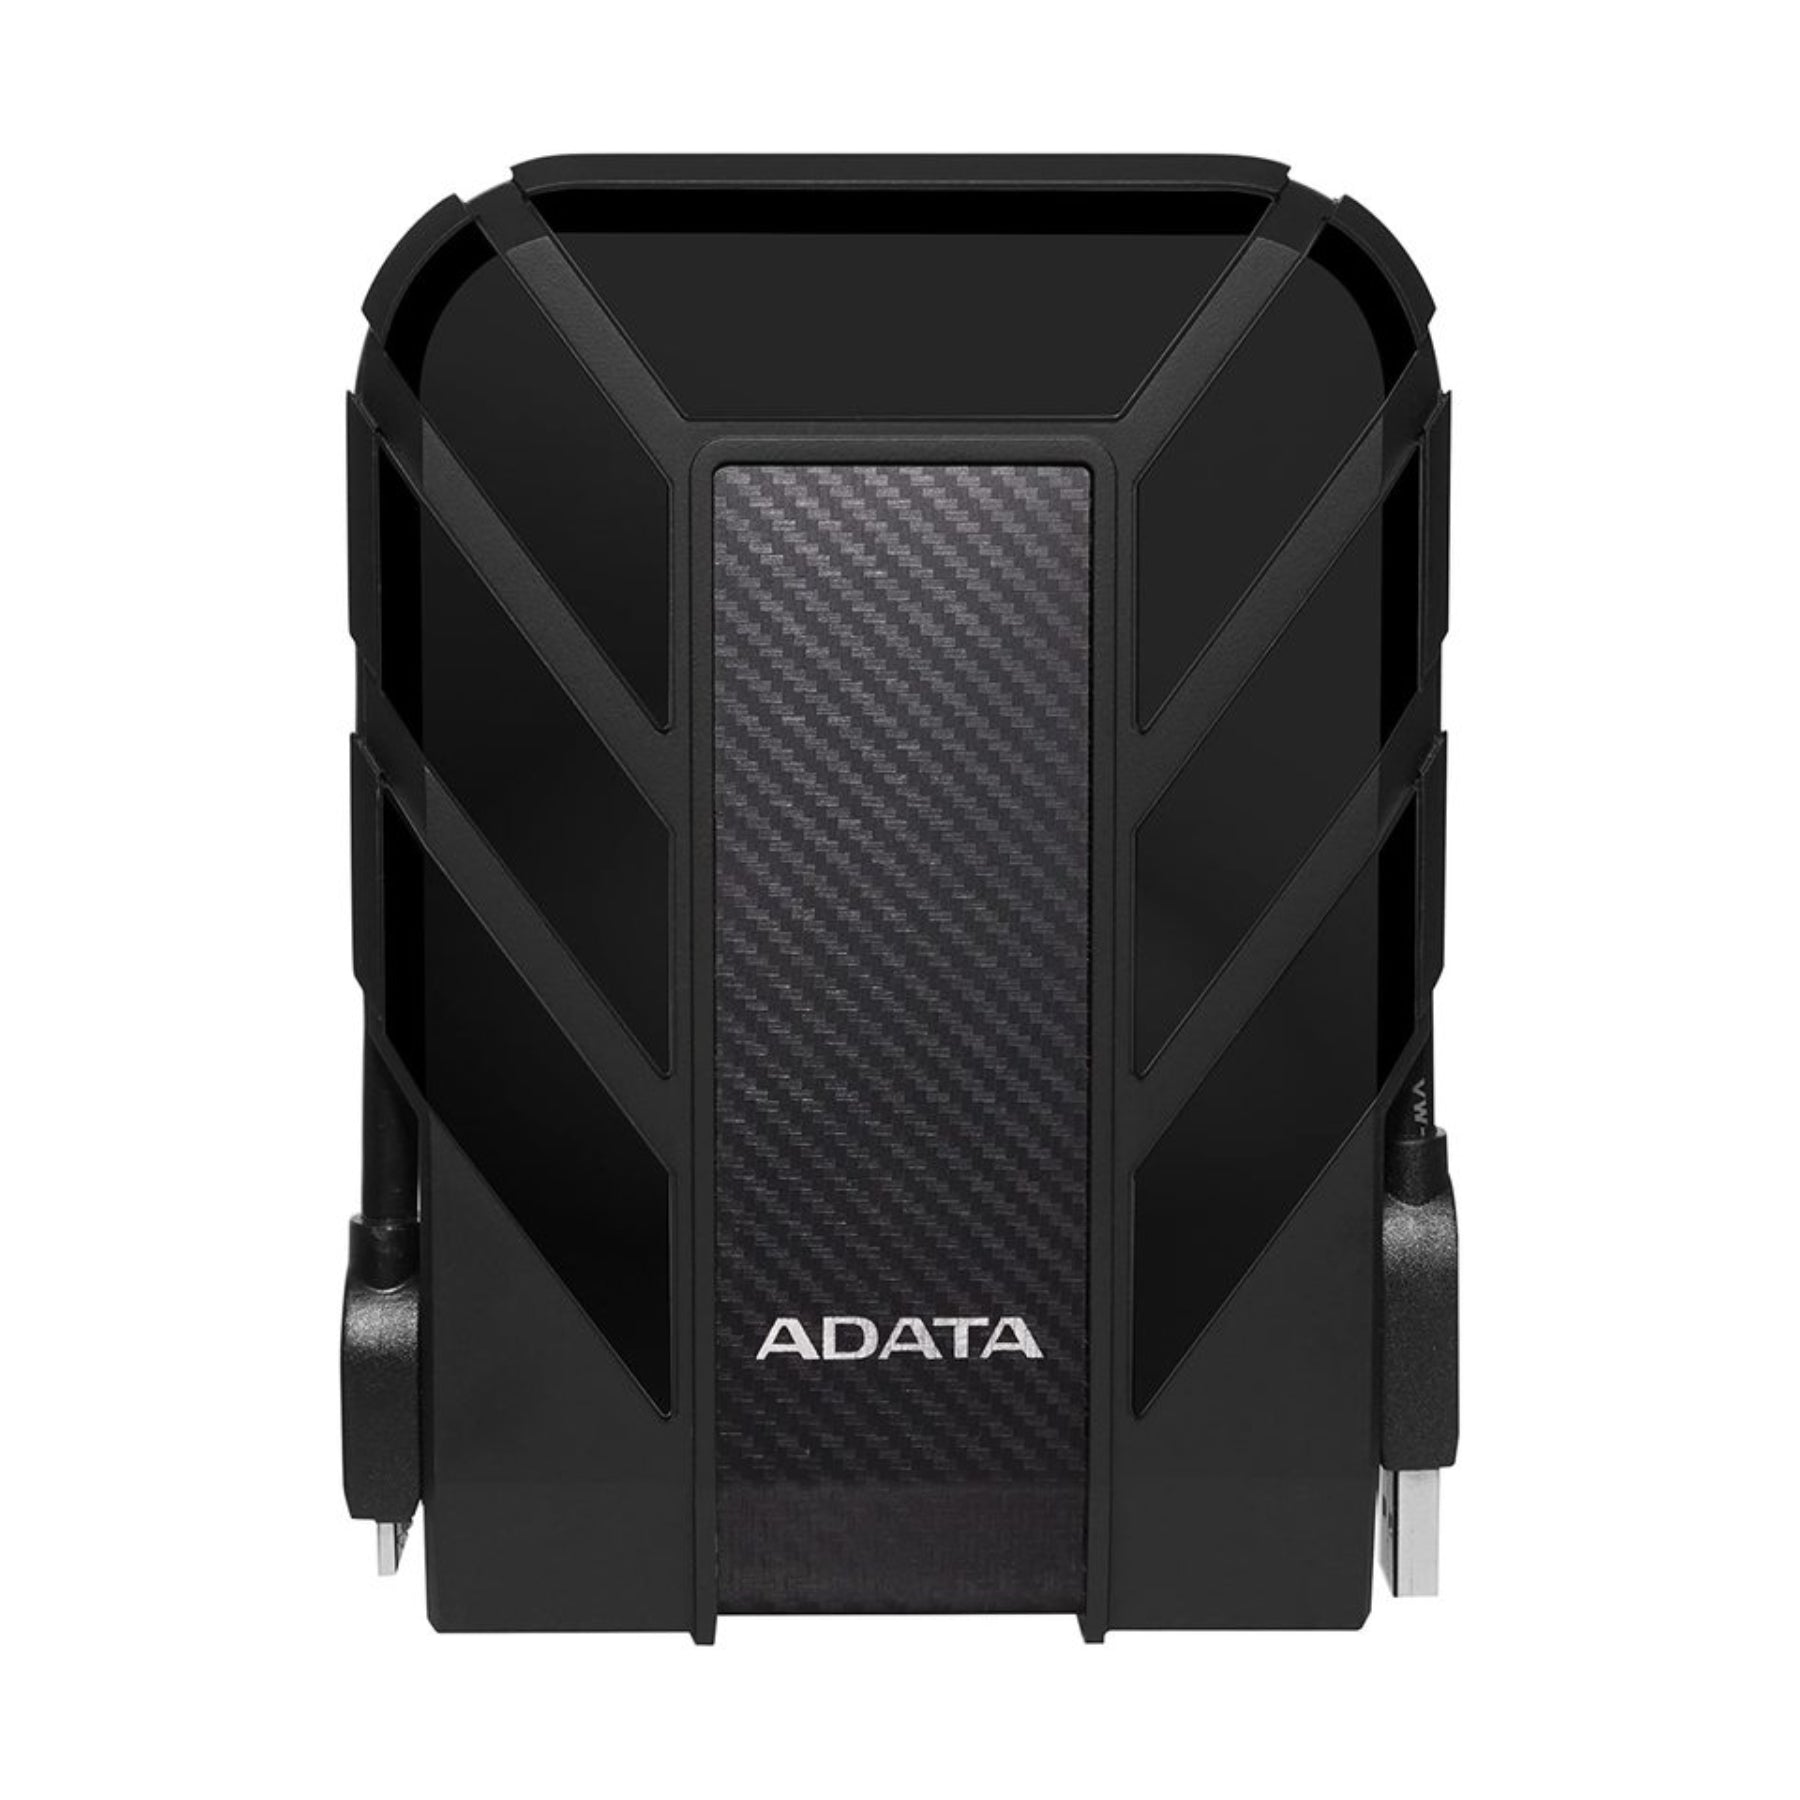 Buy Adata External Hard Drive at Topic Store